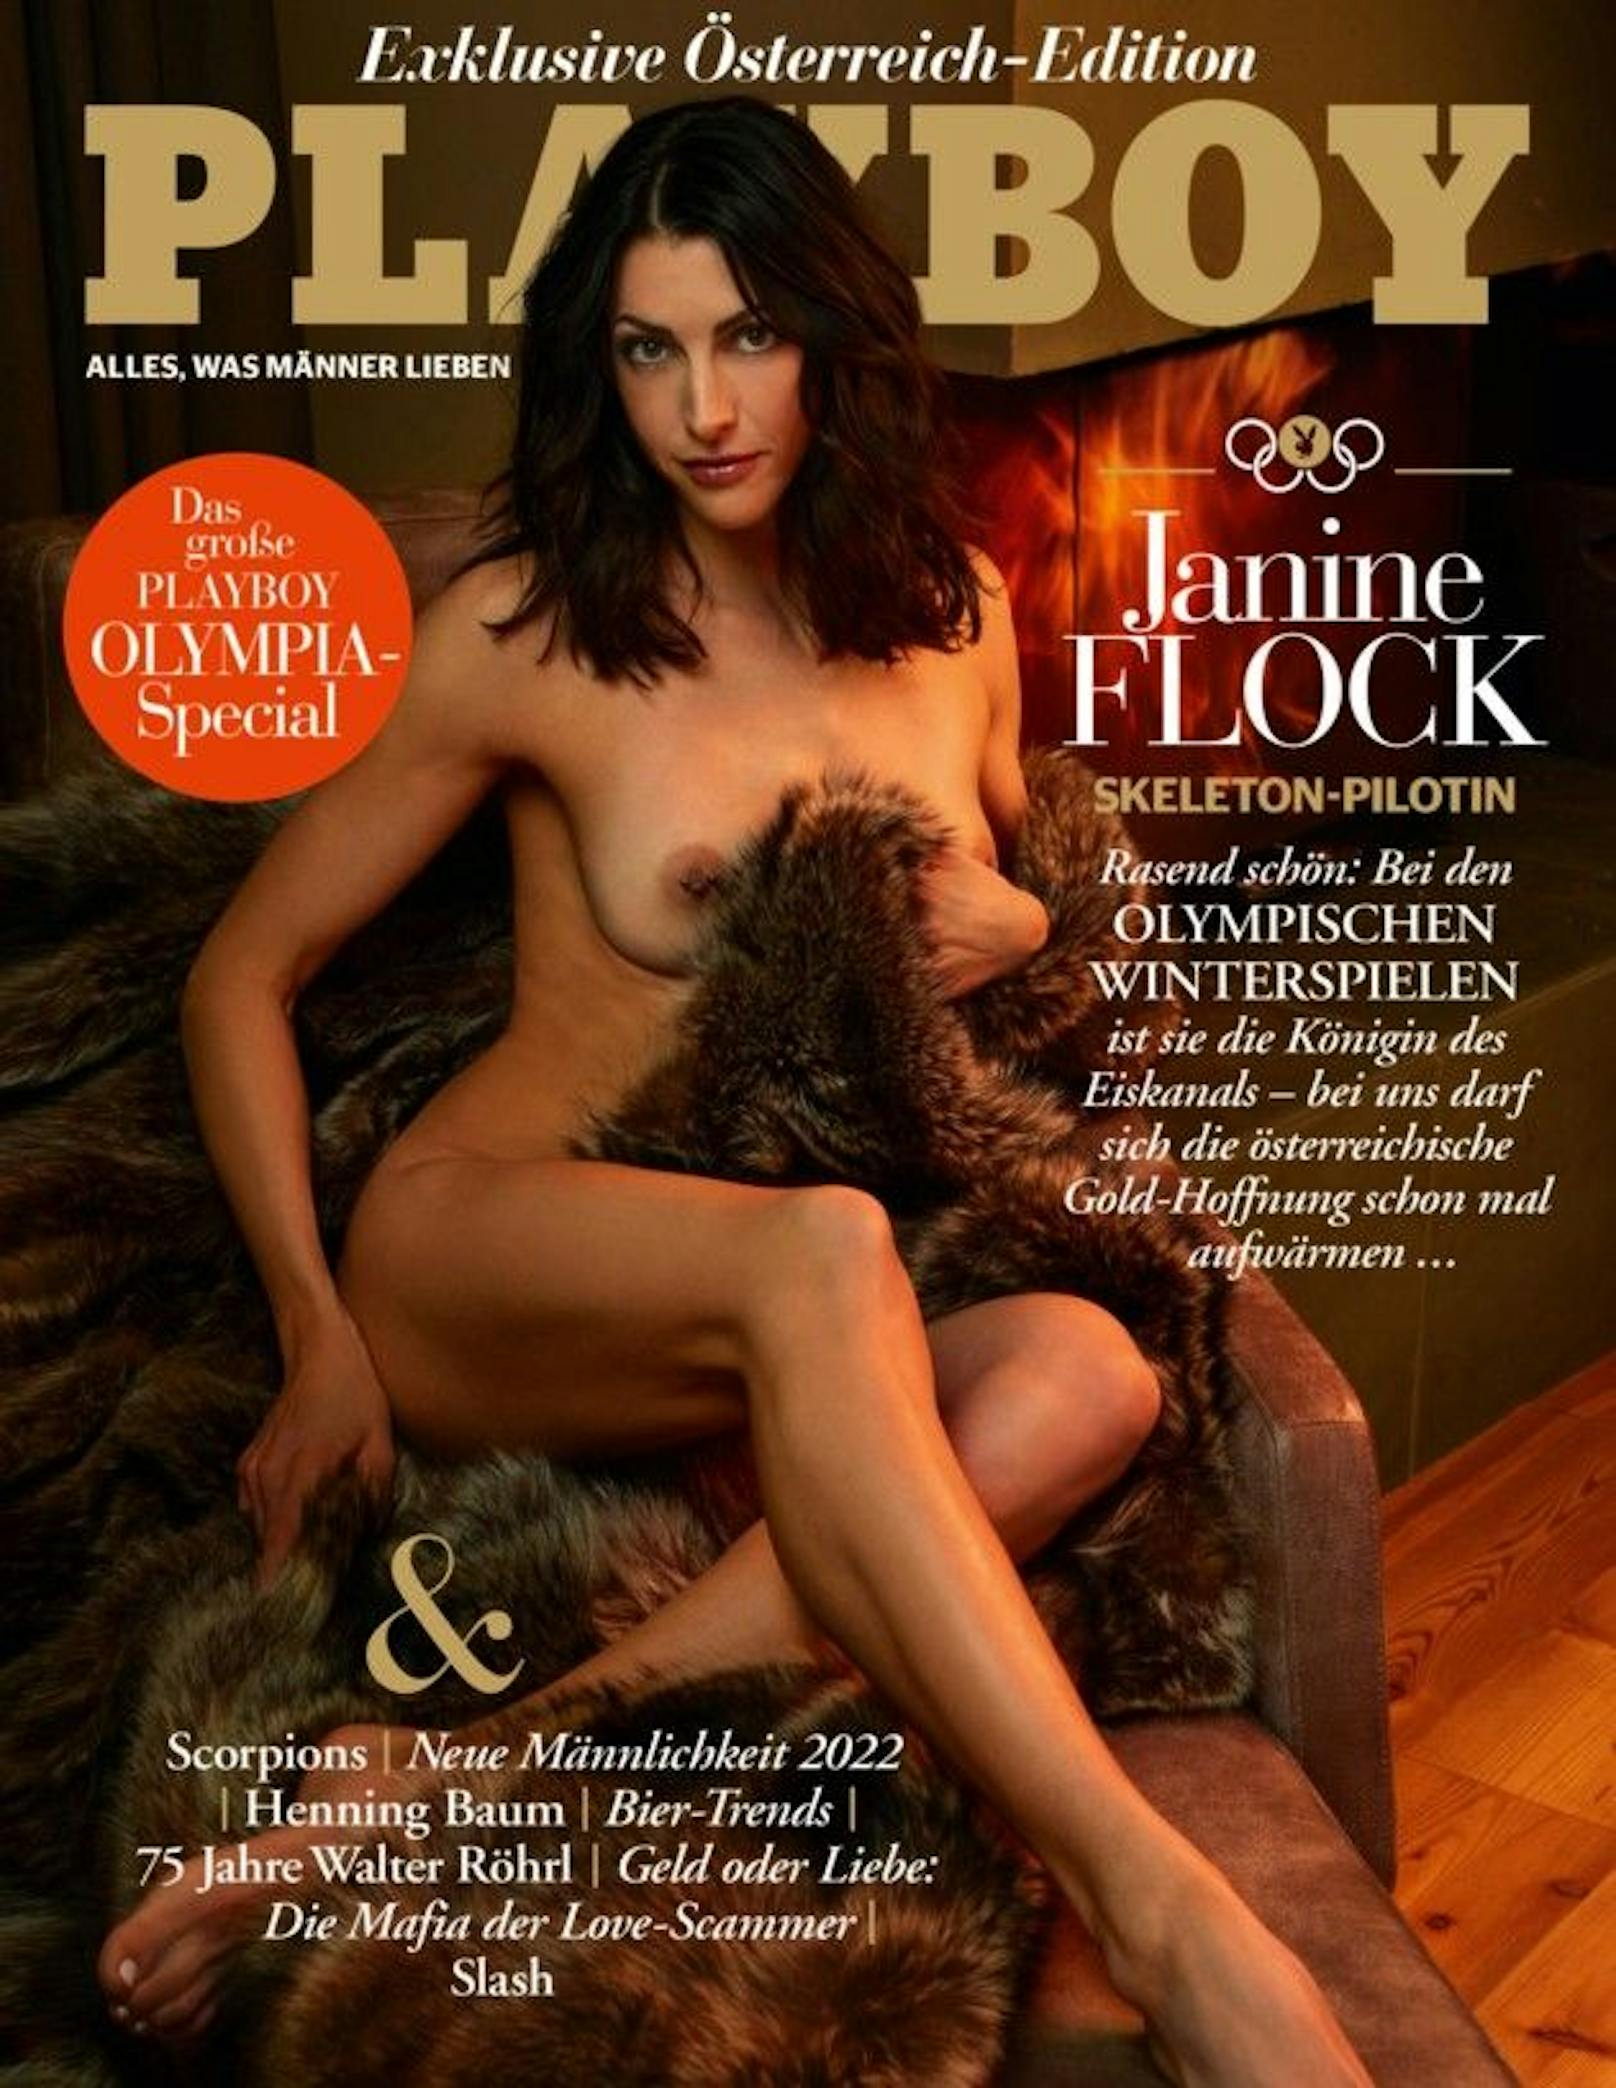 Janine Flock im Playboy